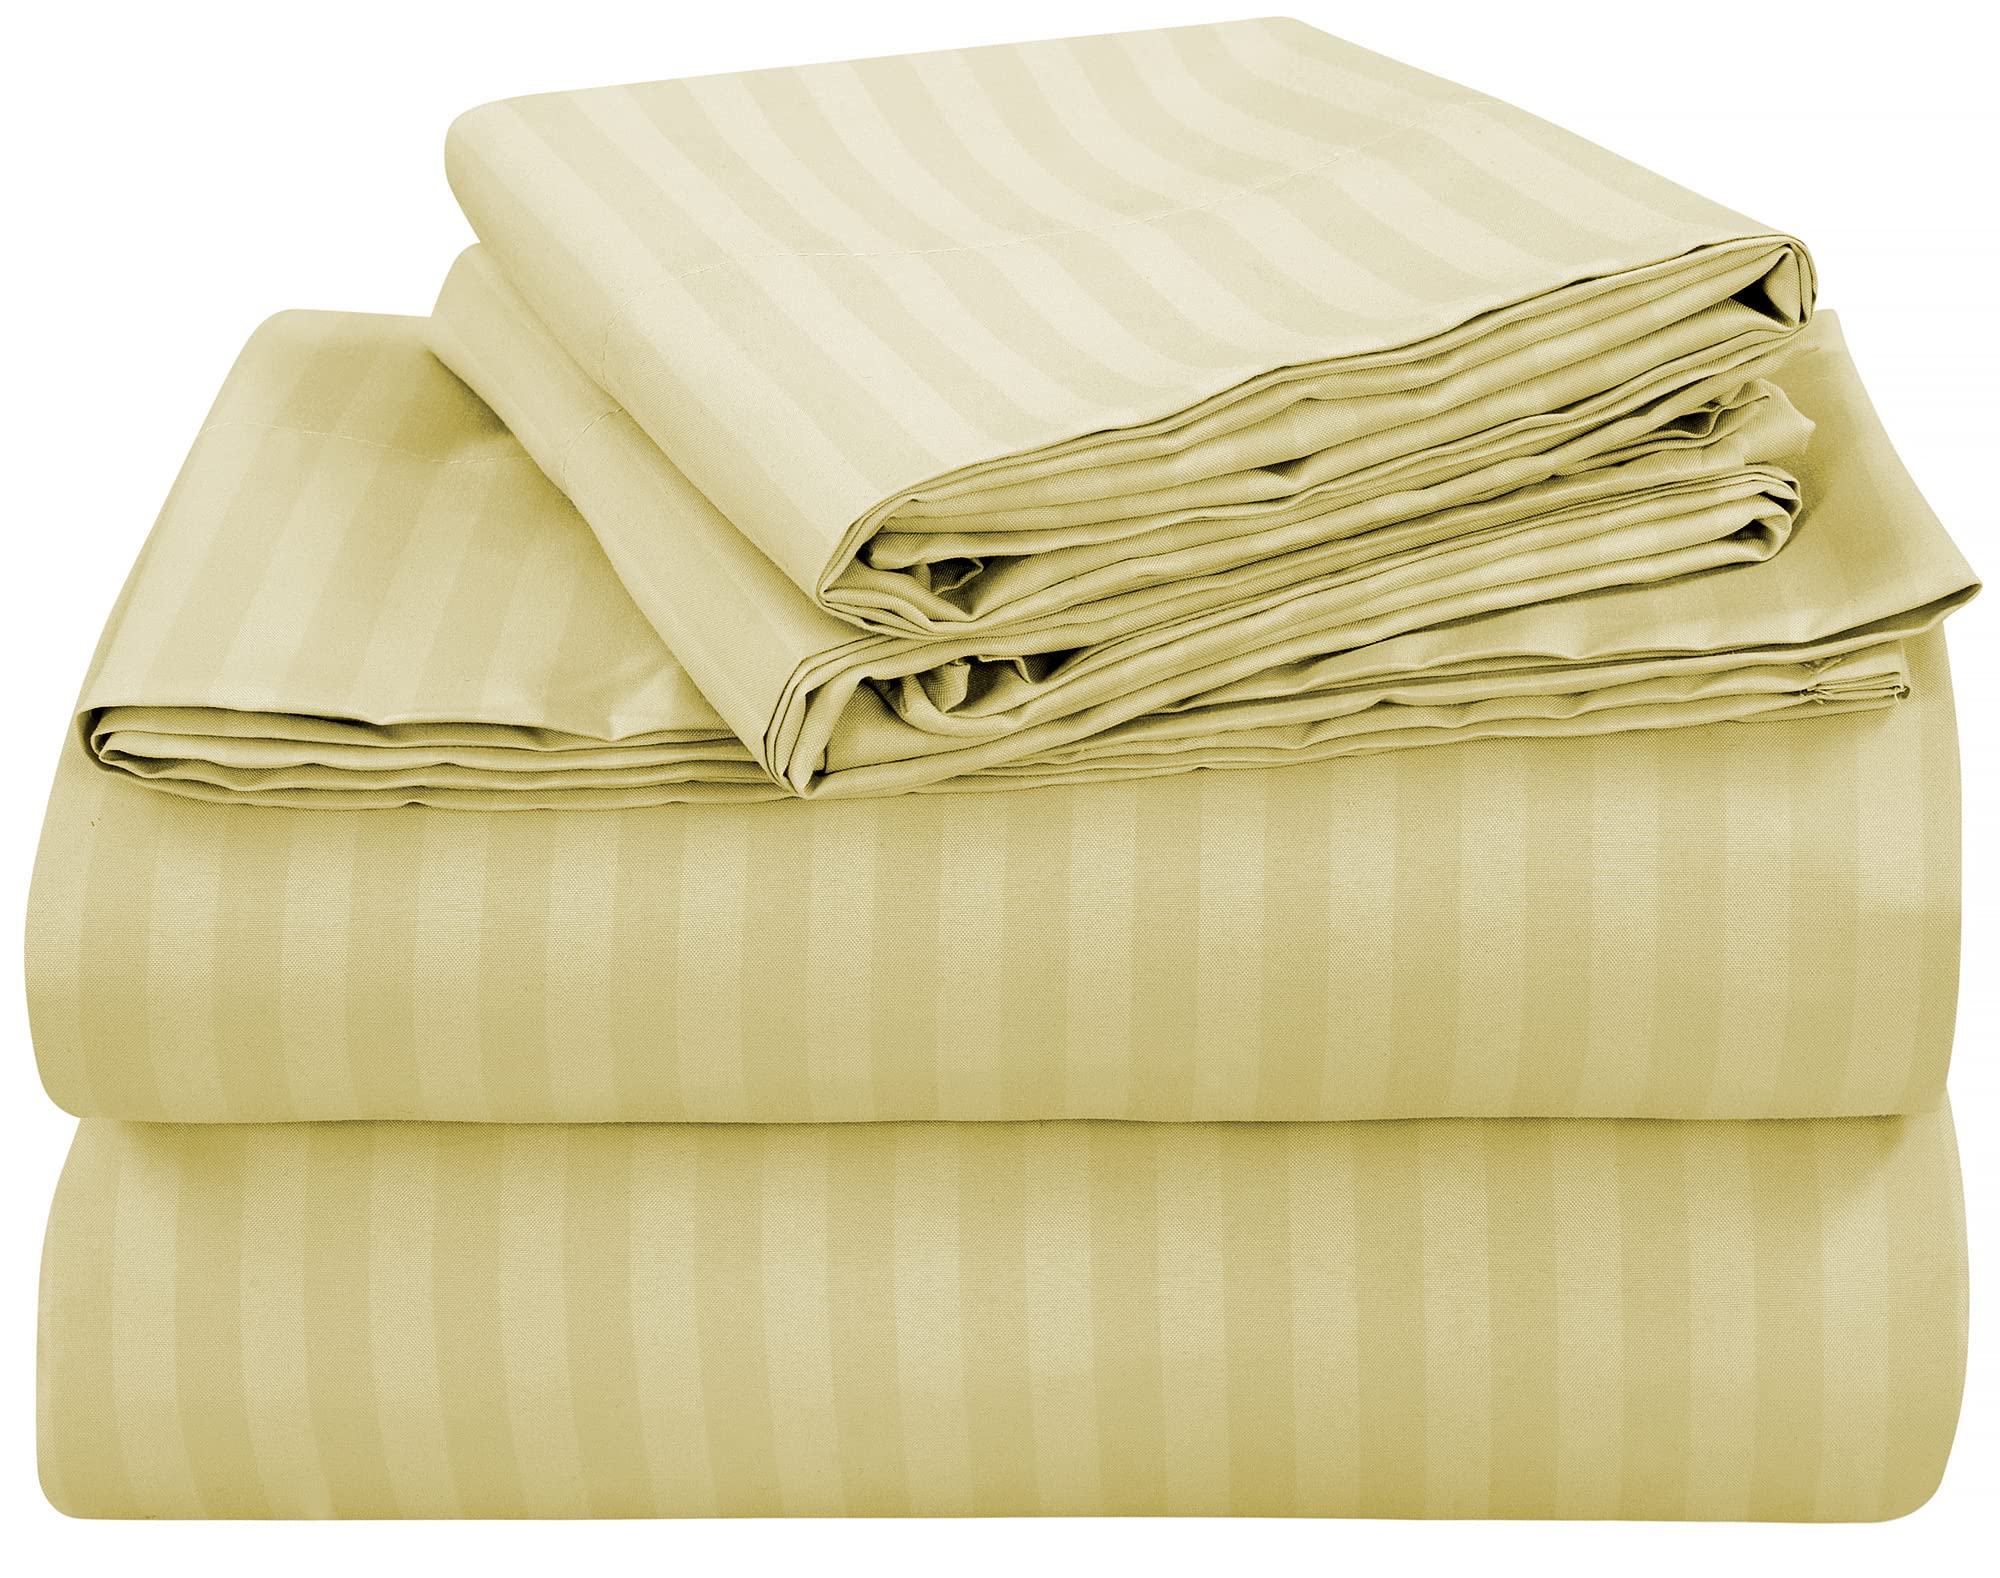 Royale Linens Striped Bed Sheet Set - Brushed Microfiber 1800 Bedding - 1 Fitted Sheet, 1 Flat Sheet, 2 Pillow Case - Wrinkle Fa